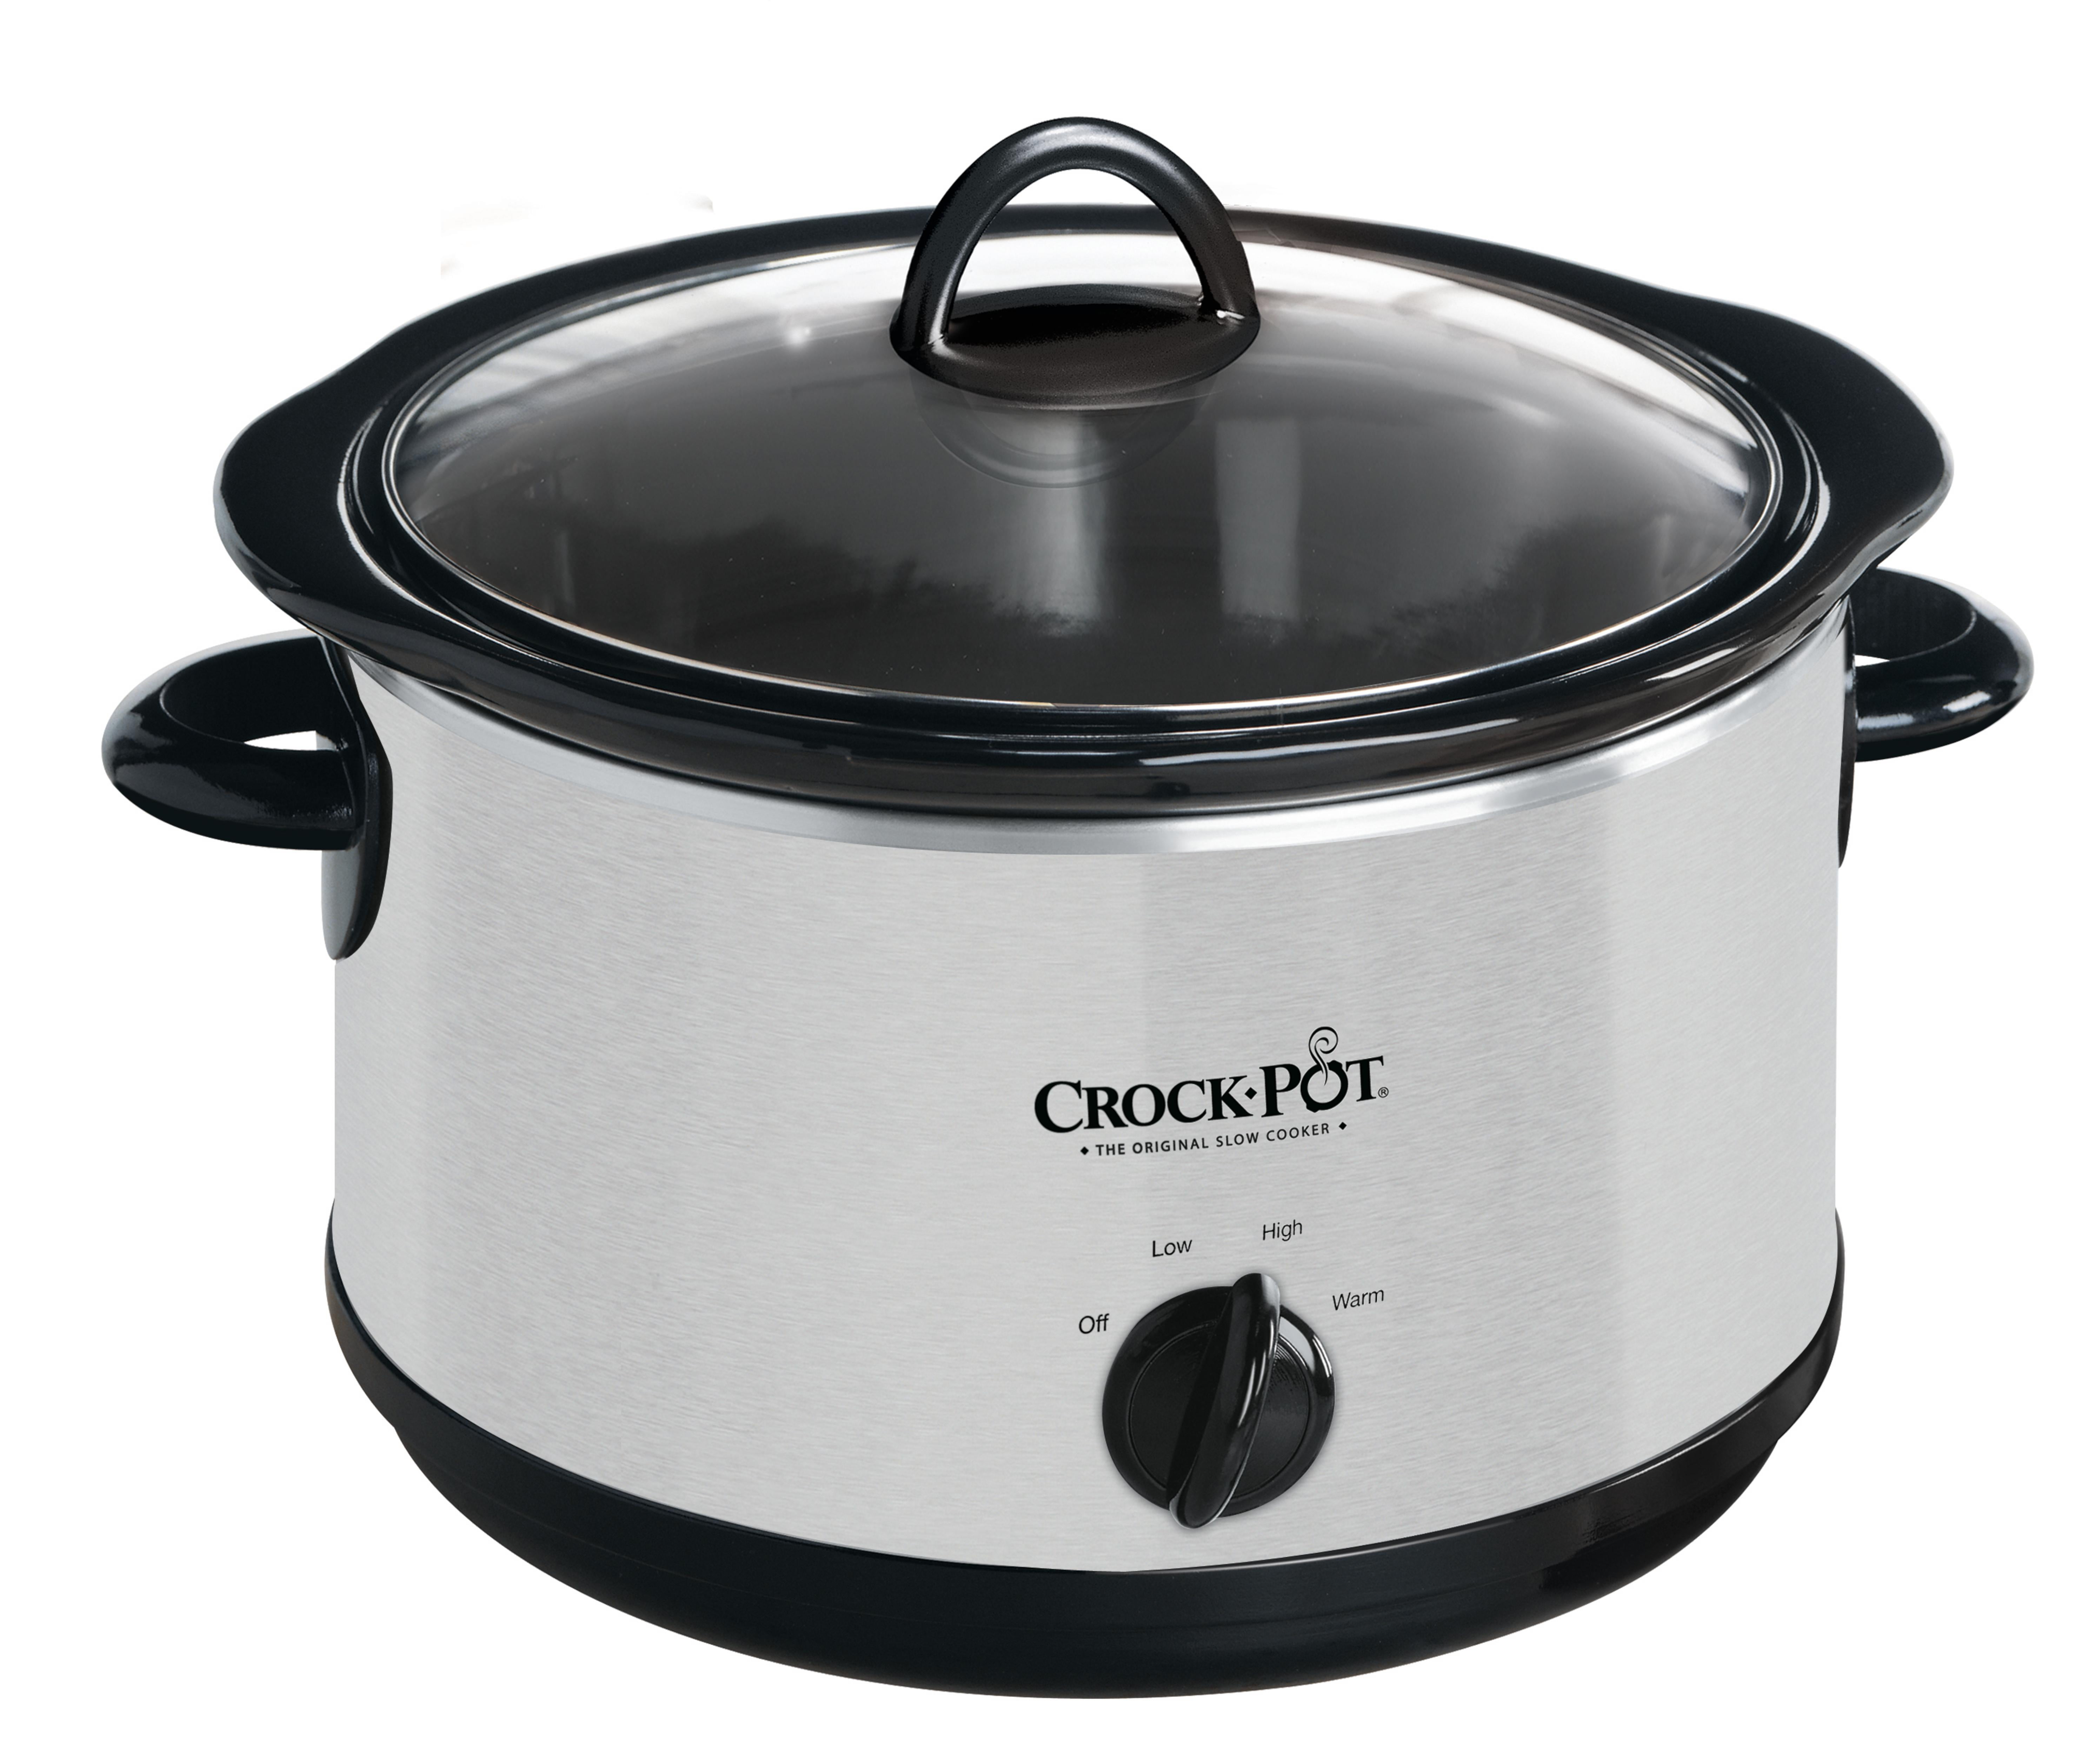 Crock-Pot The Original Slow Cooker, 5-Quart, Stainless Steel